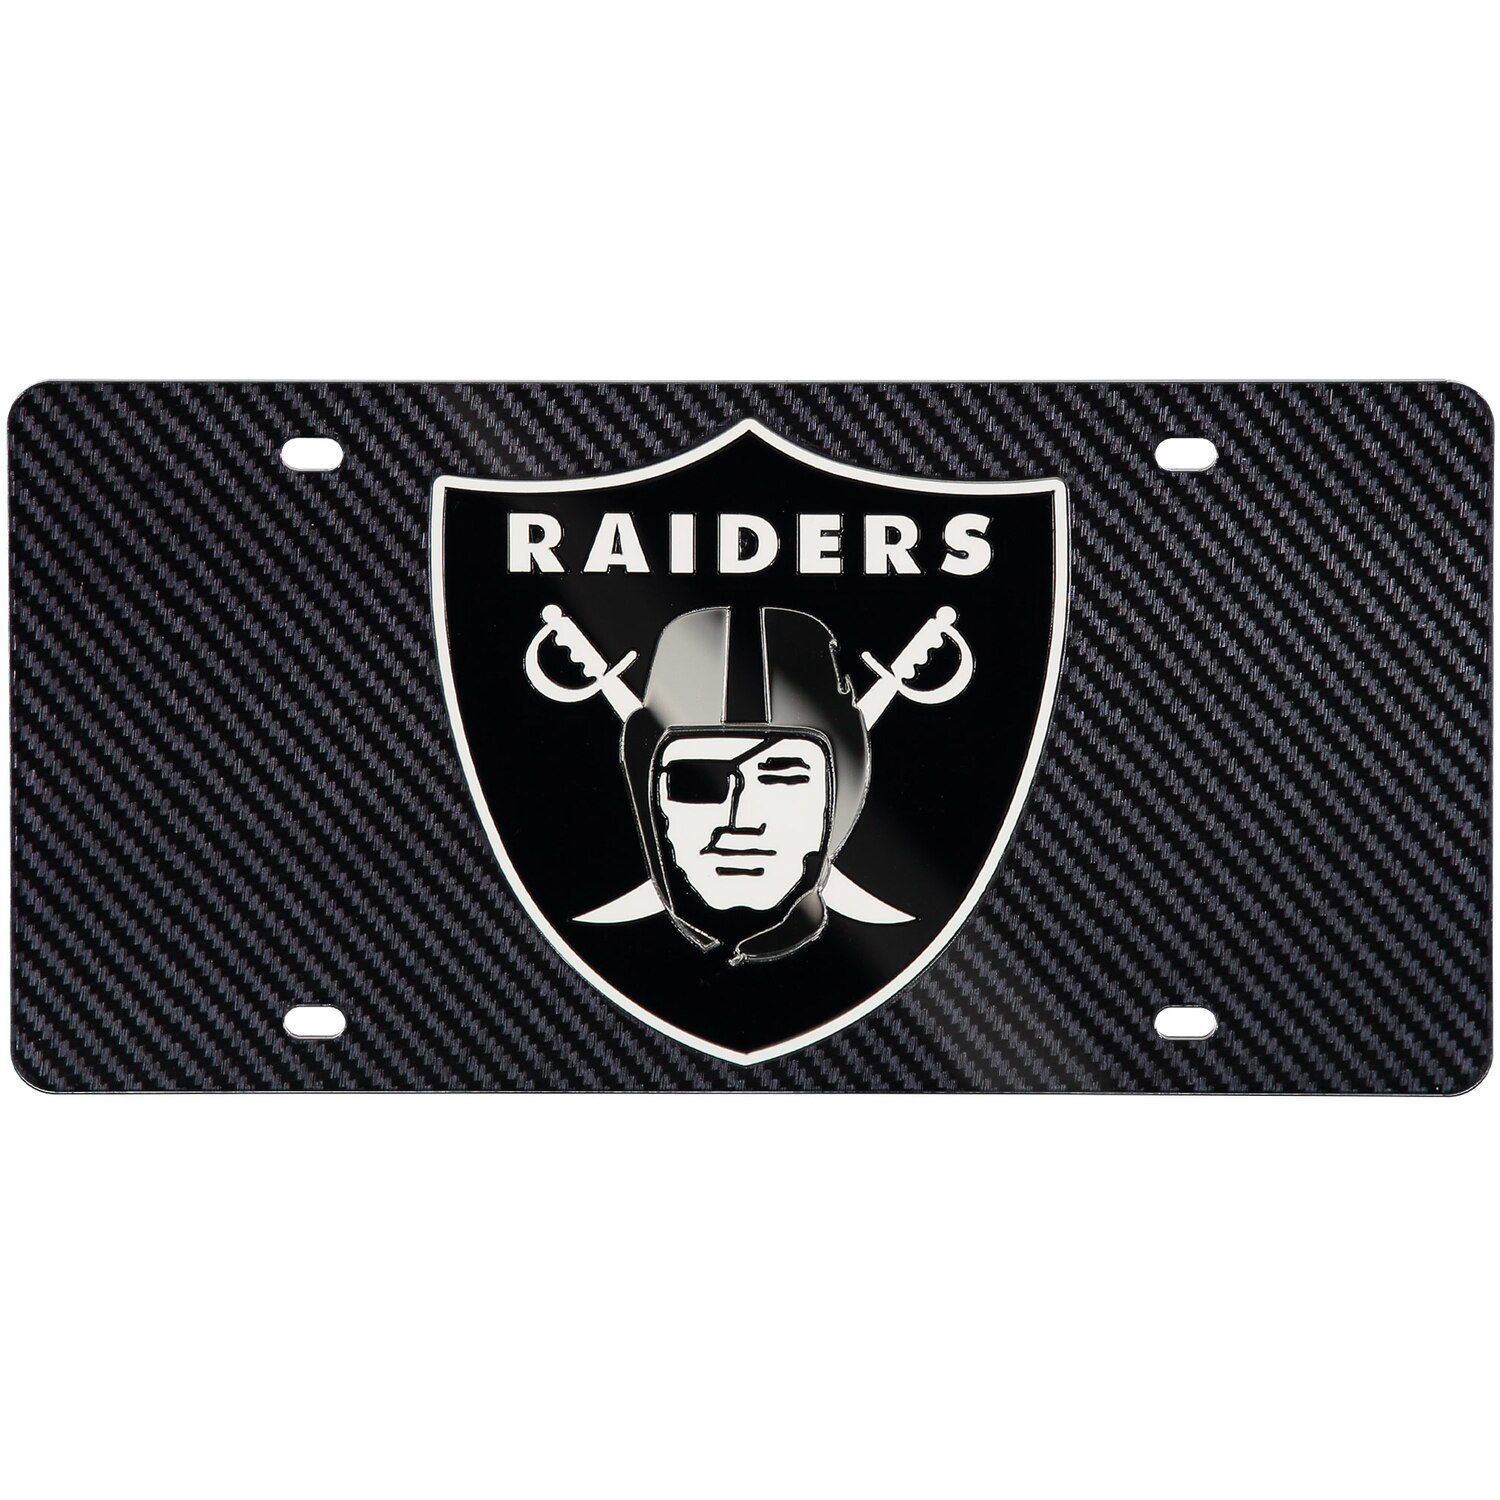 Image for Unbranded Oakland Raiders Carbon Fiber License Plate at Kohl's.